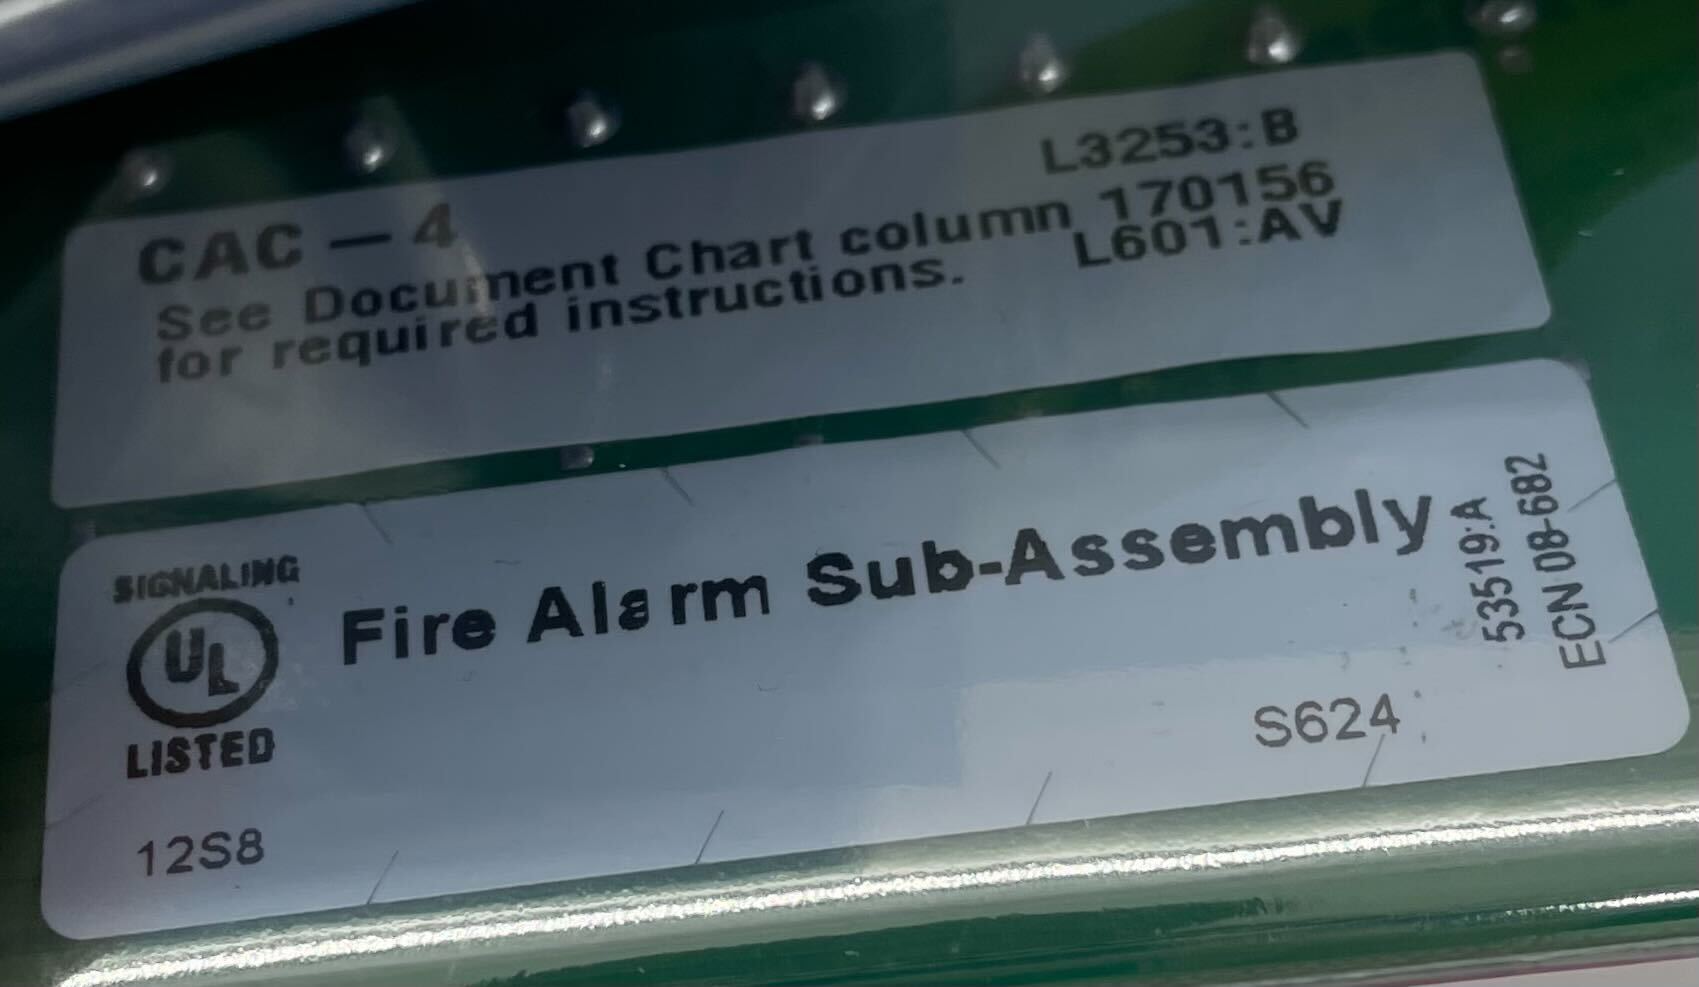 Firelite CAC-4 - The Fire Alarm Supplier